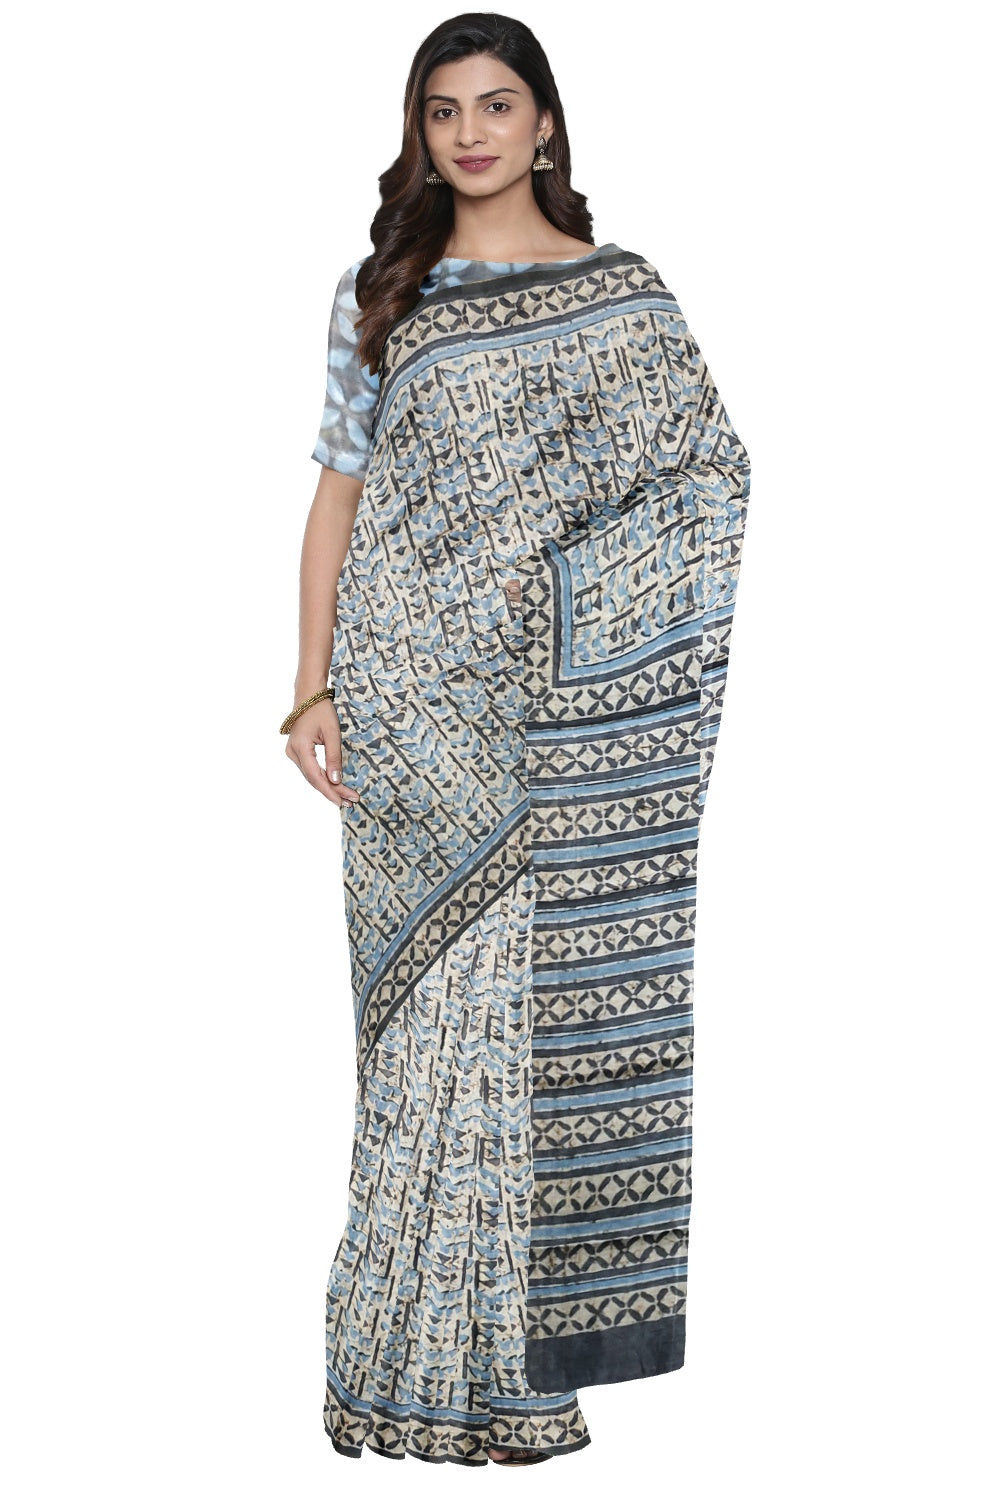 Southloom Blue Cotton Chanderi Printed Designer Saree